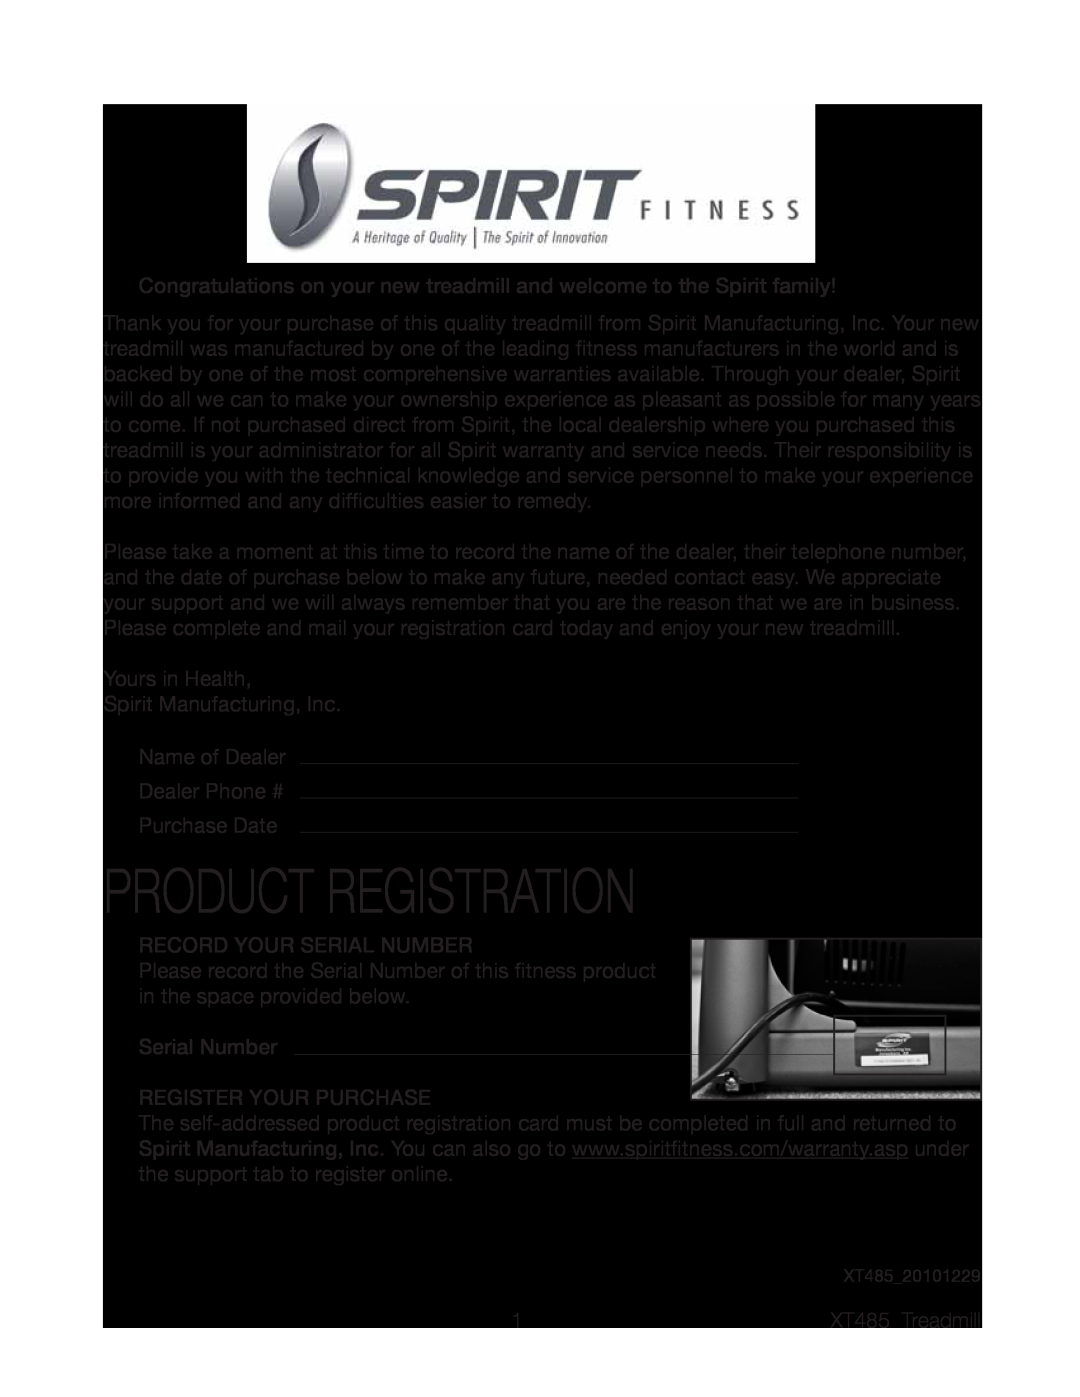 Spirit XT485 owner manual Product Registration 